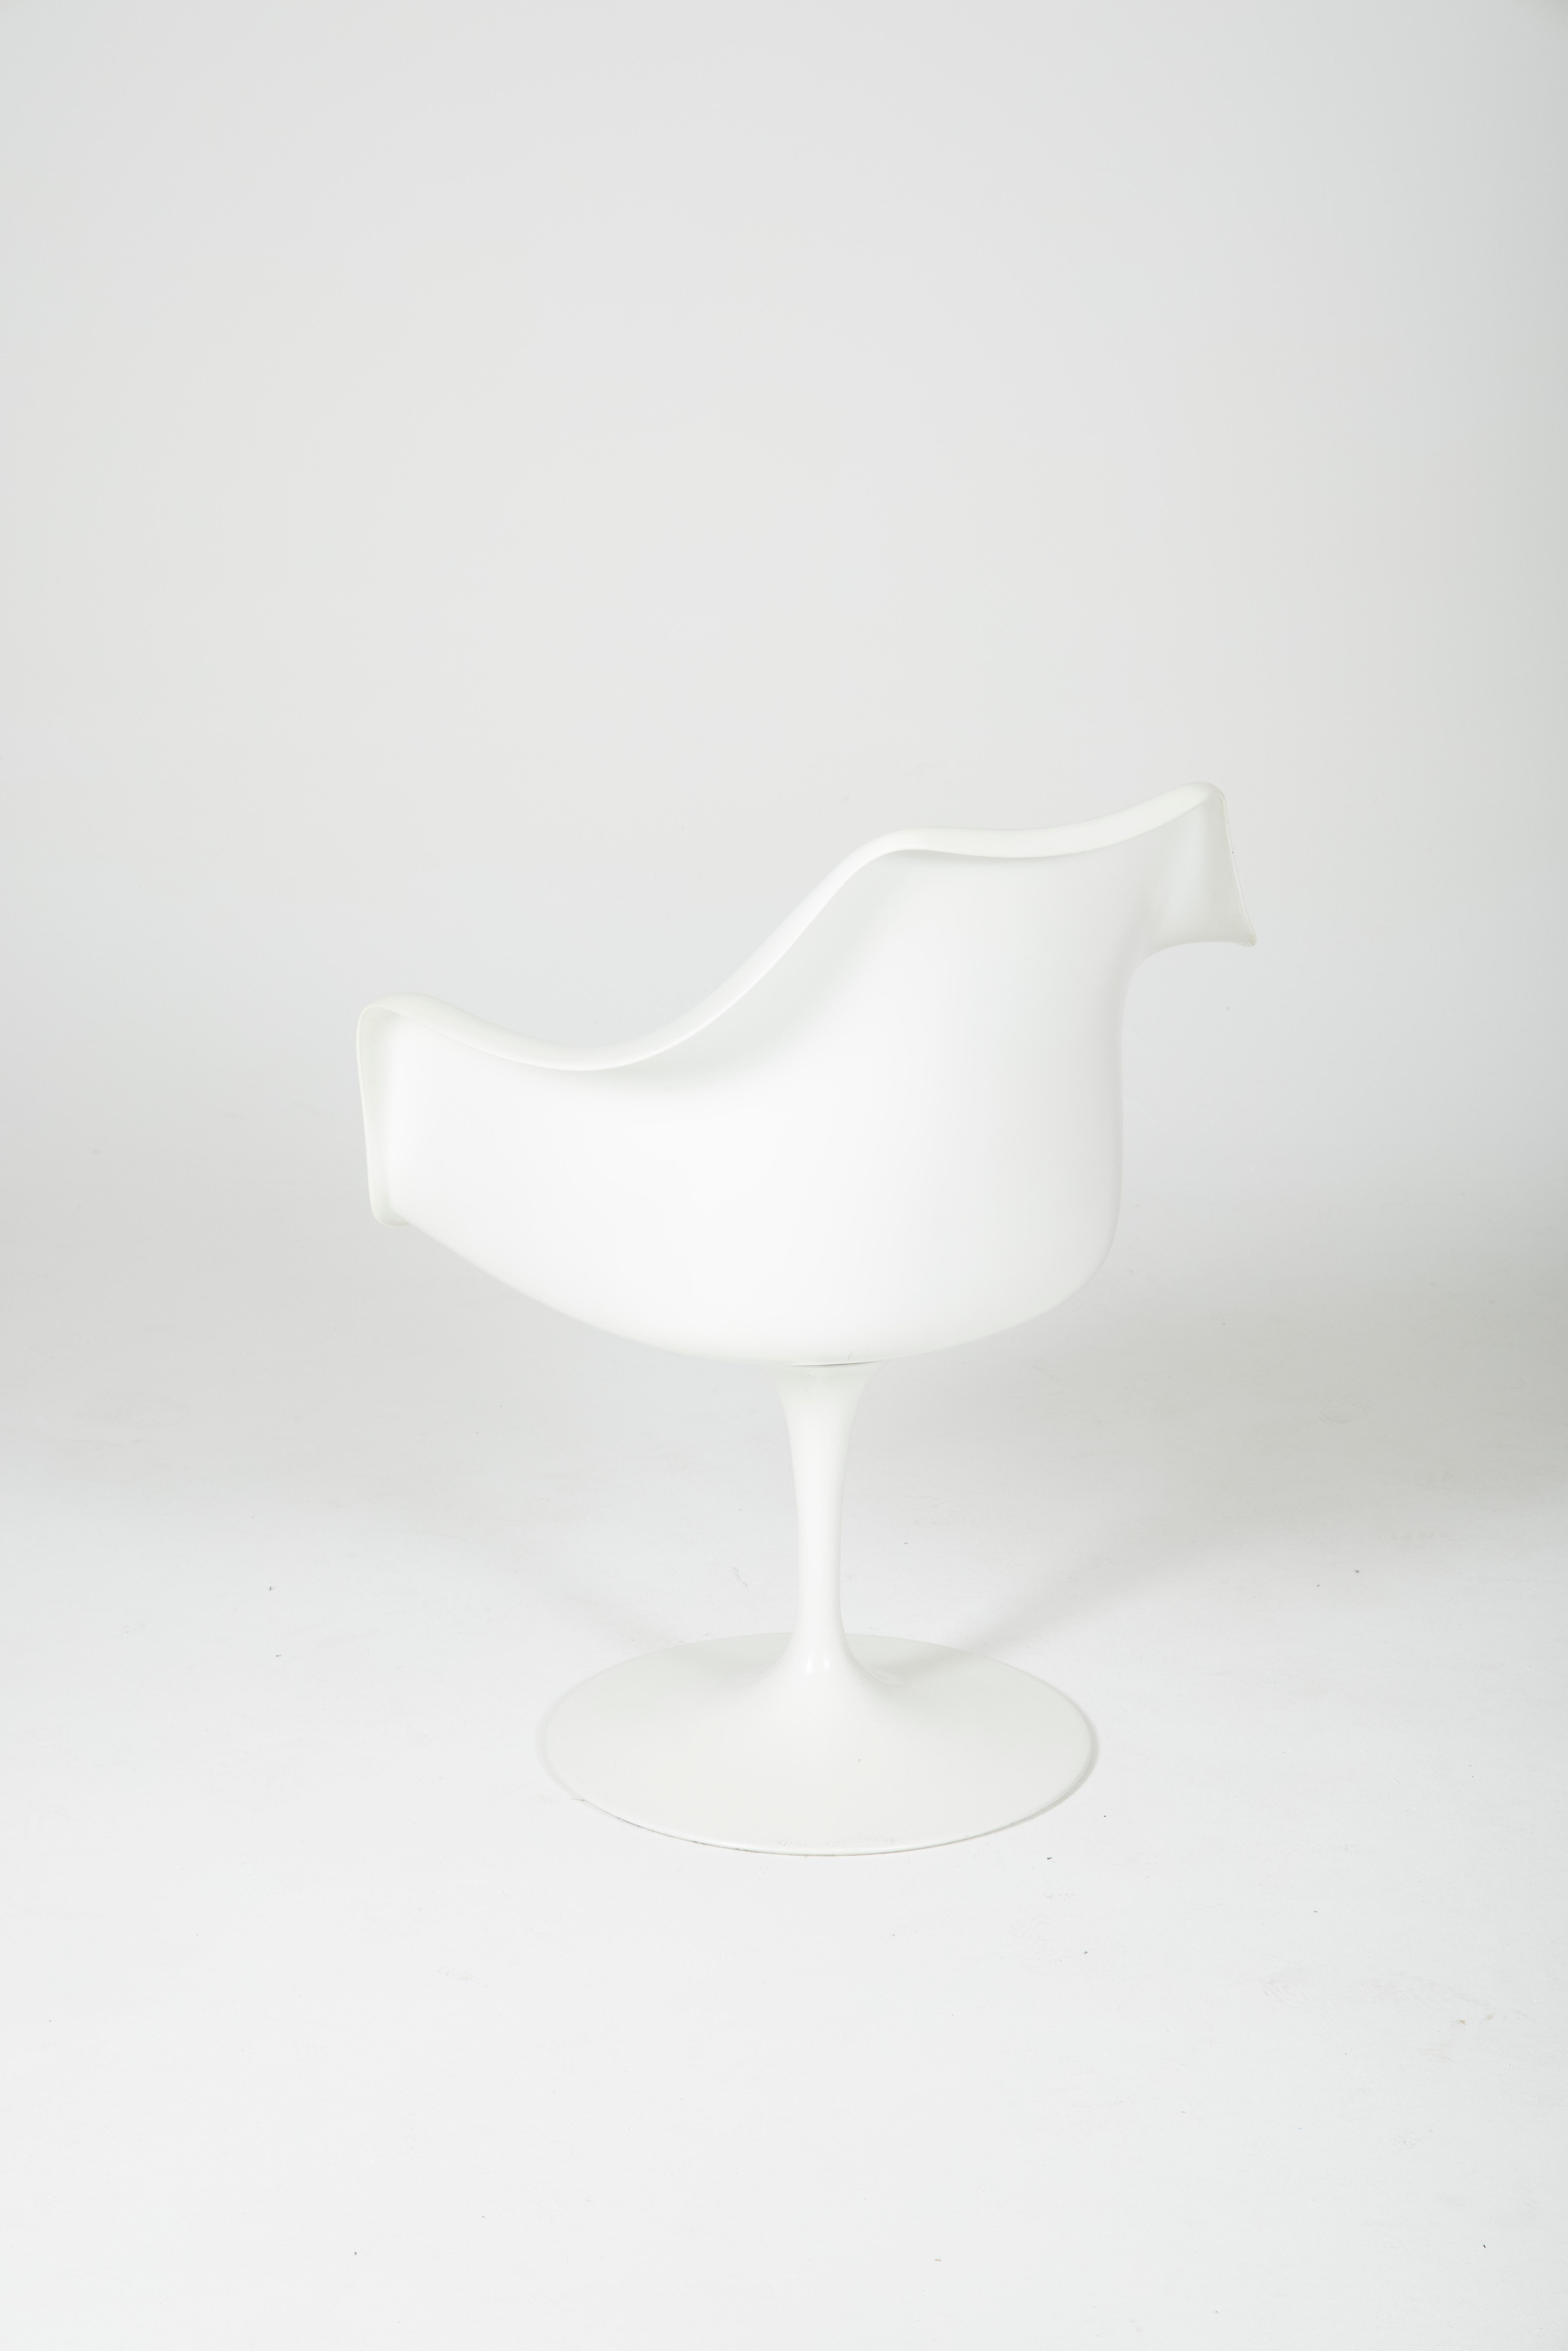 American Tulip Chair by Eero Saarinen for Knoll International, 1970s